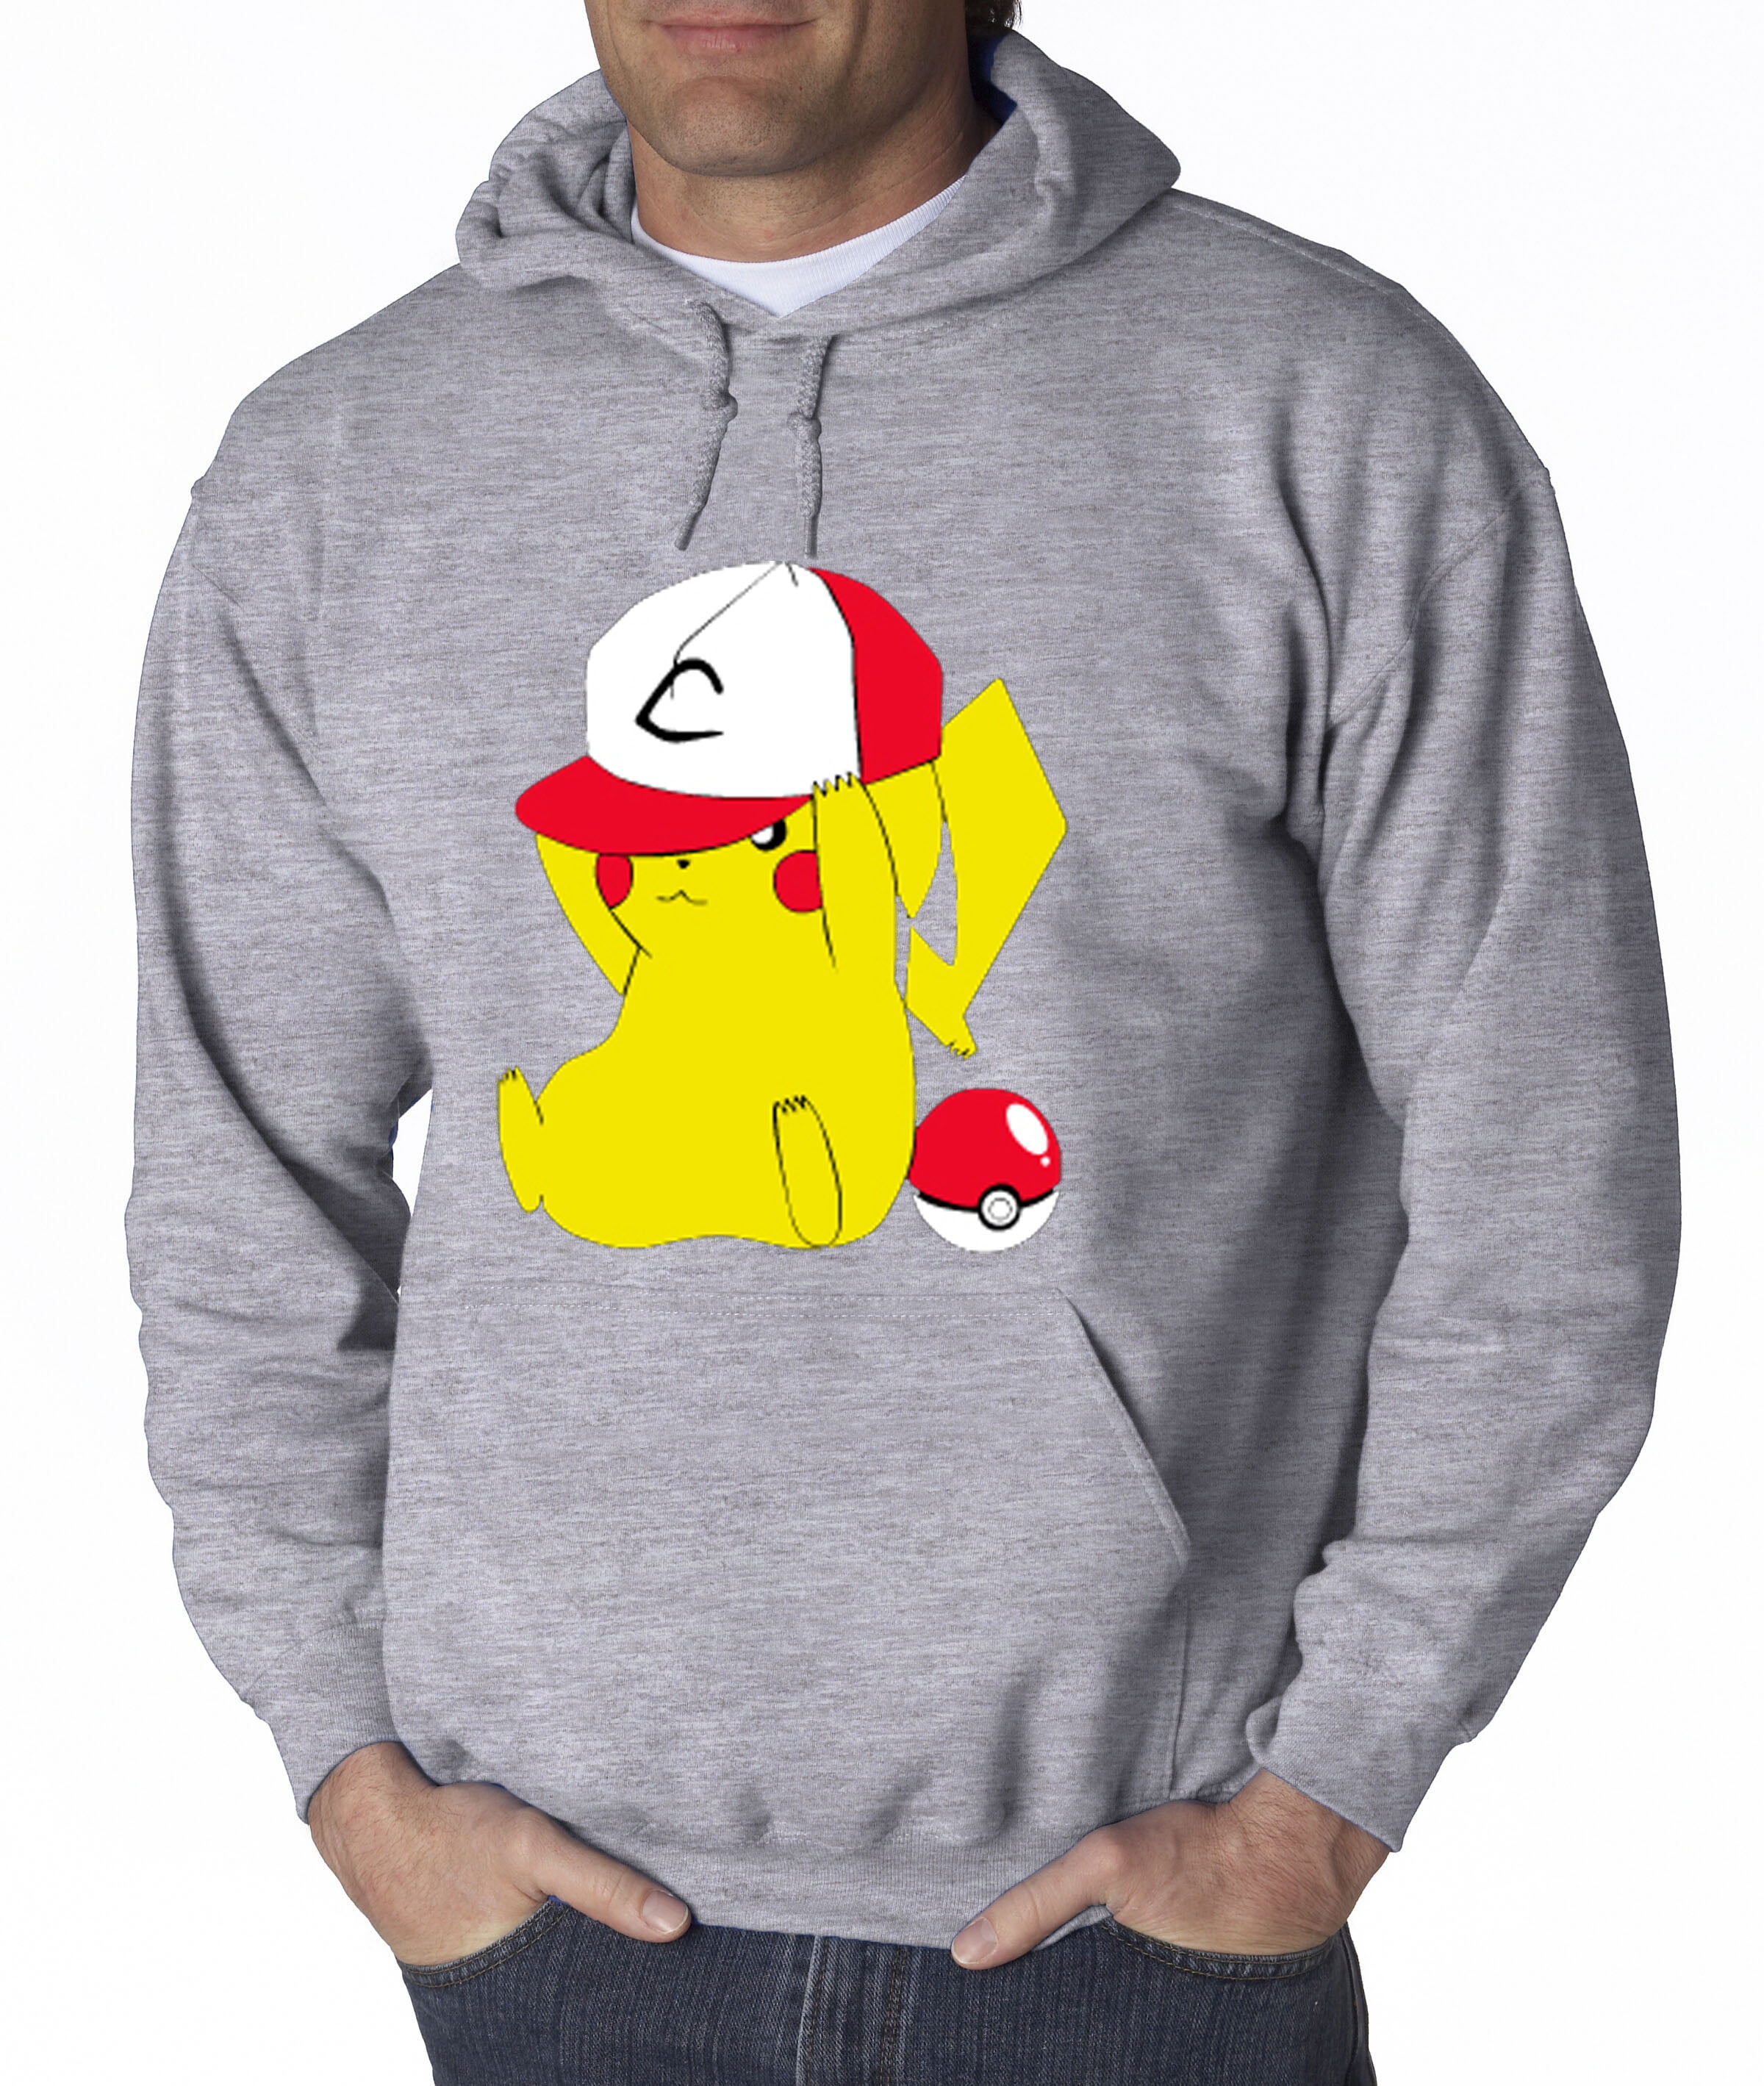 3D print pokemon pokeballs 3D Galaxy Casual Women/Men Sweatshirt Hoodies Pullove